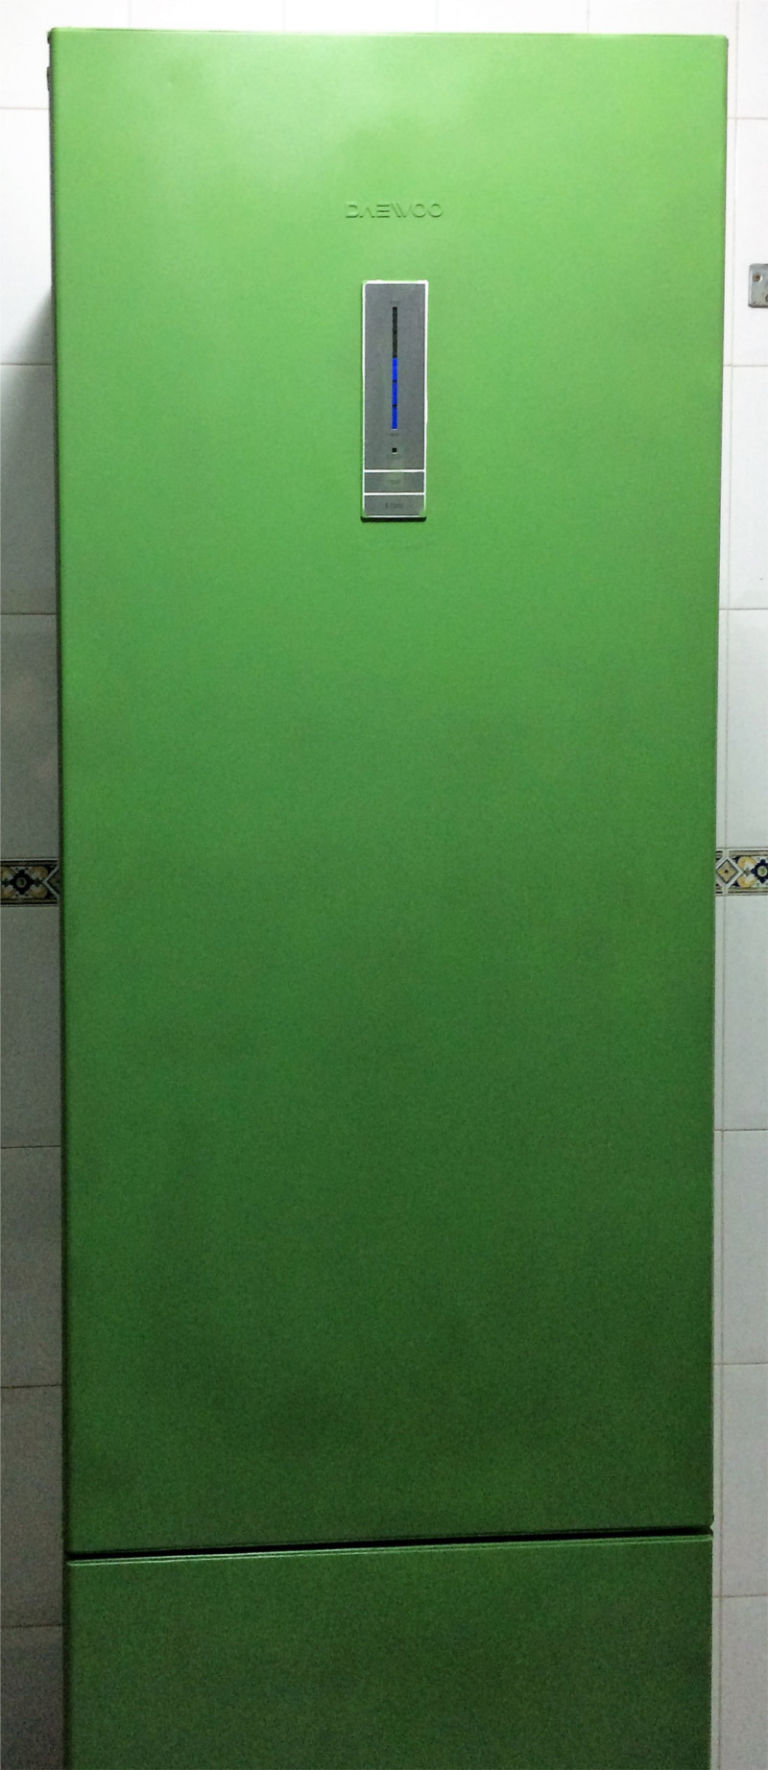 fridge-painted-spray-paint-pintyplus-768x1770